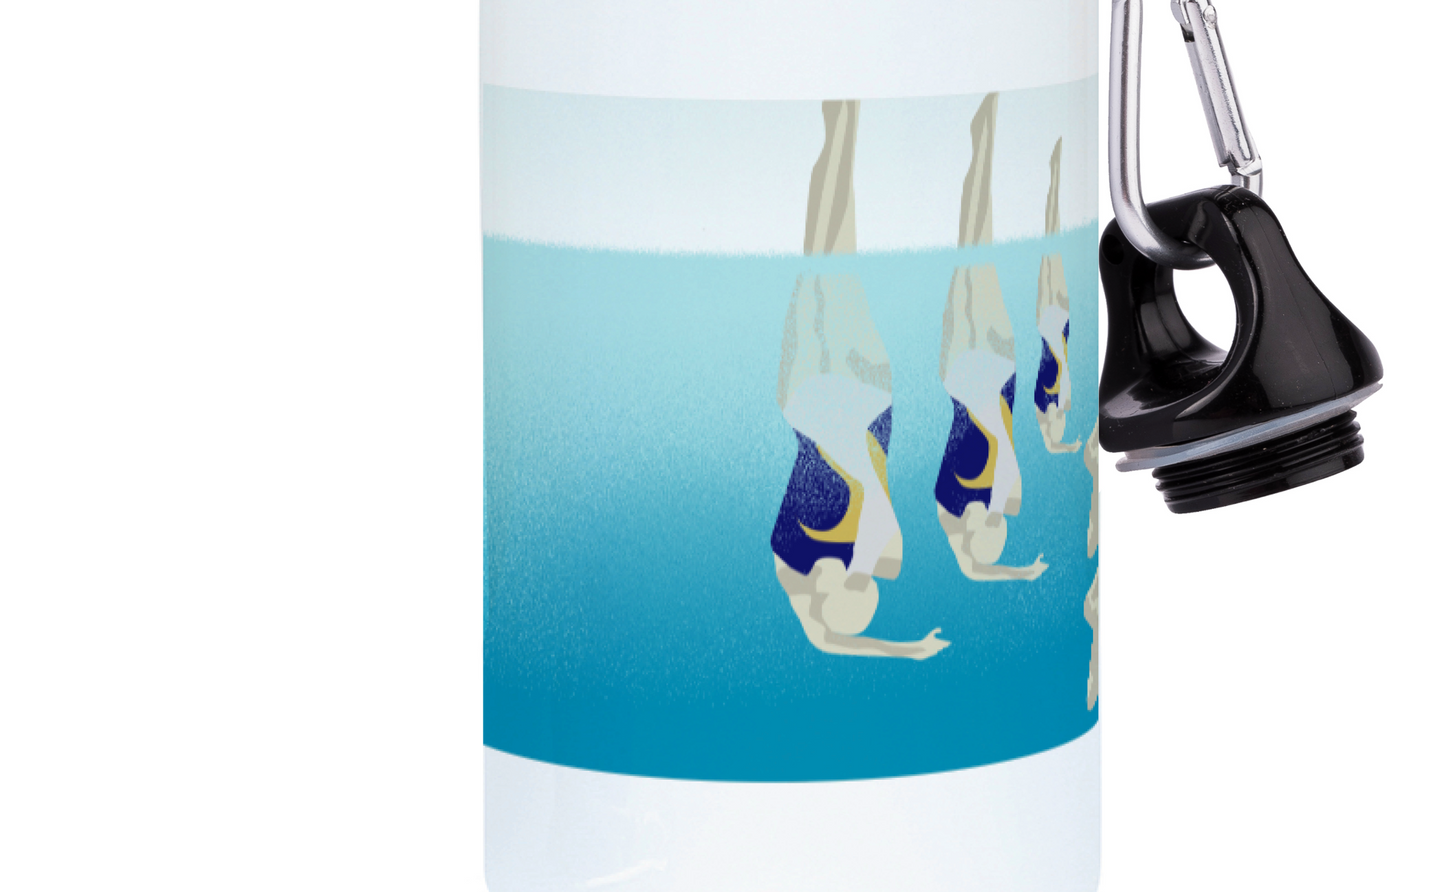 Synchronized swimming aluminum bottle "Water dance" - Customizable